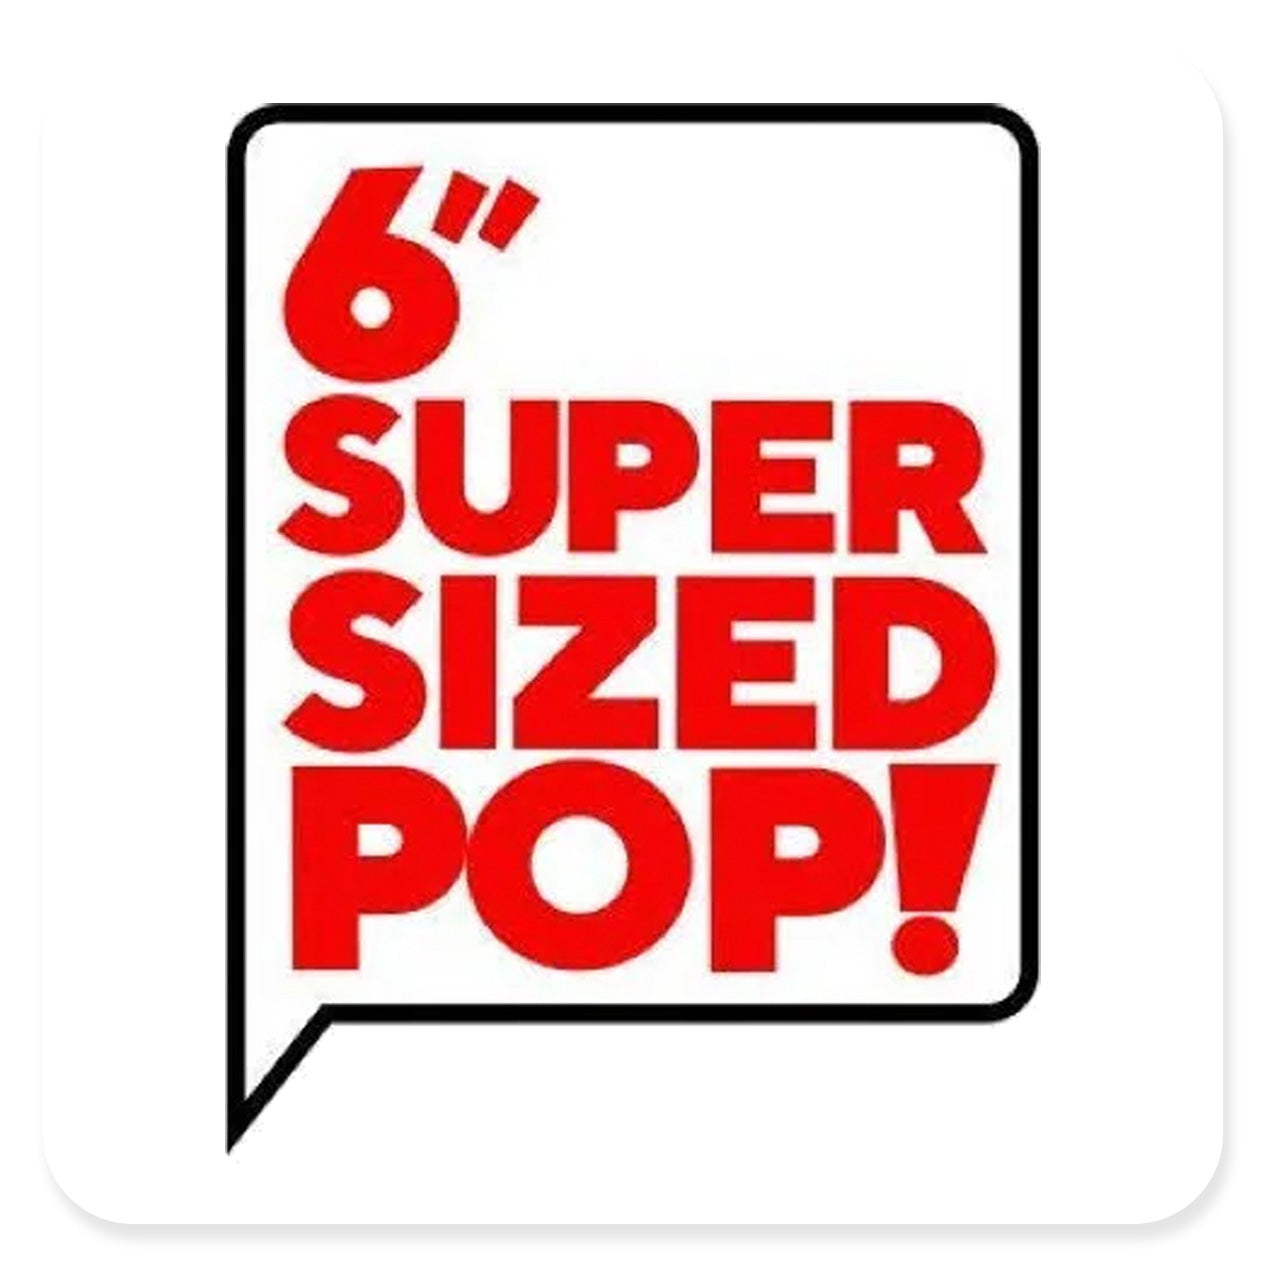 POP! SUPER SIZED